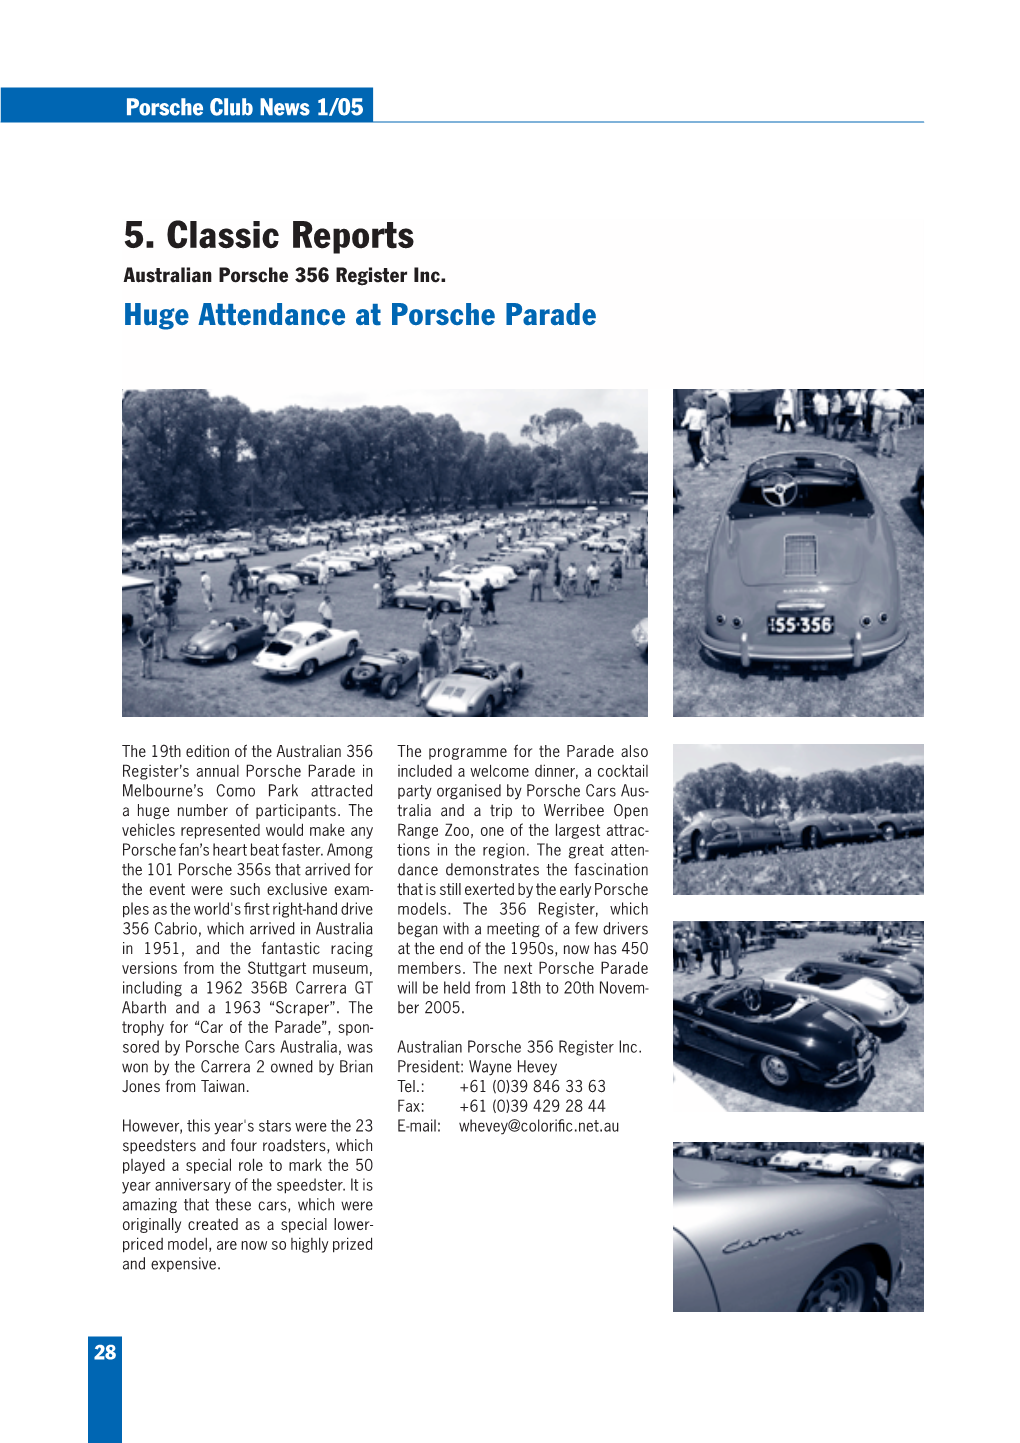 5. Classic Reports Australian Porsche 356 Register Inc